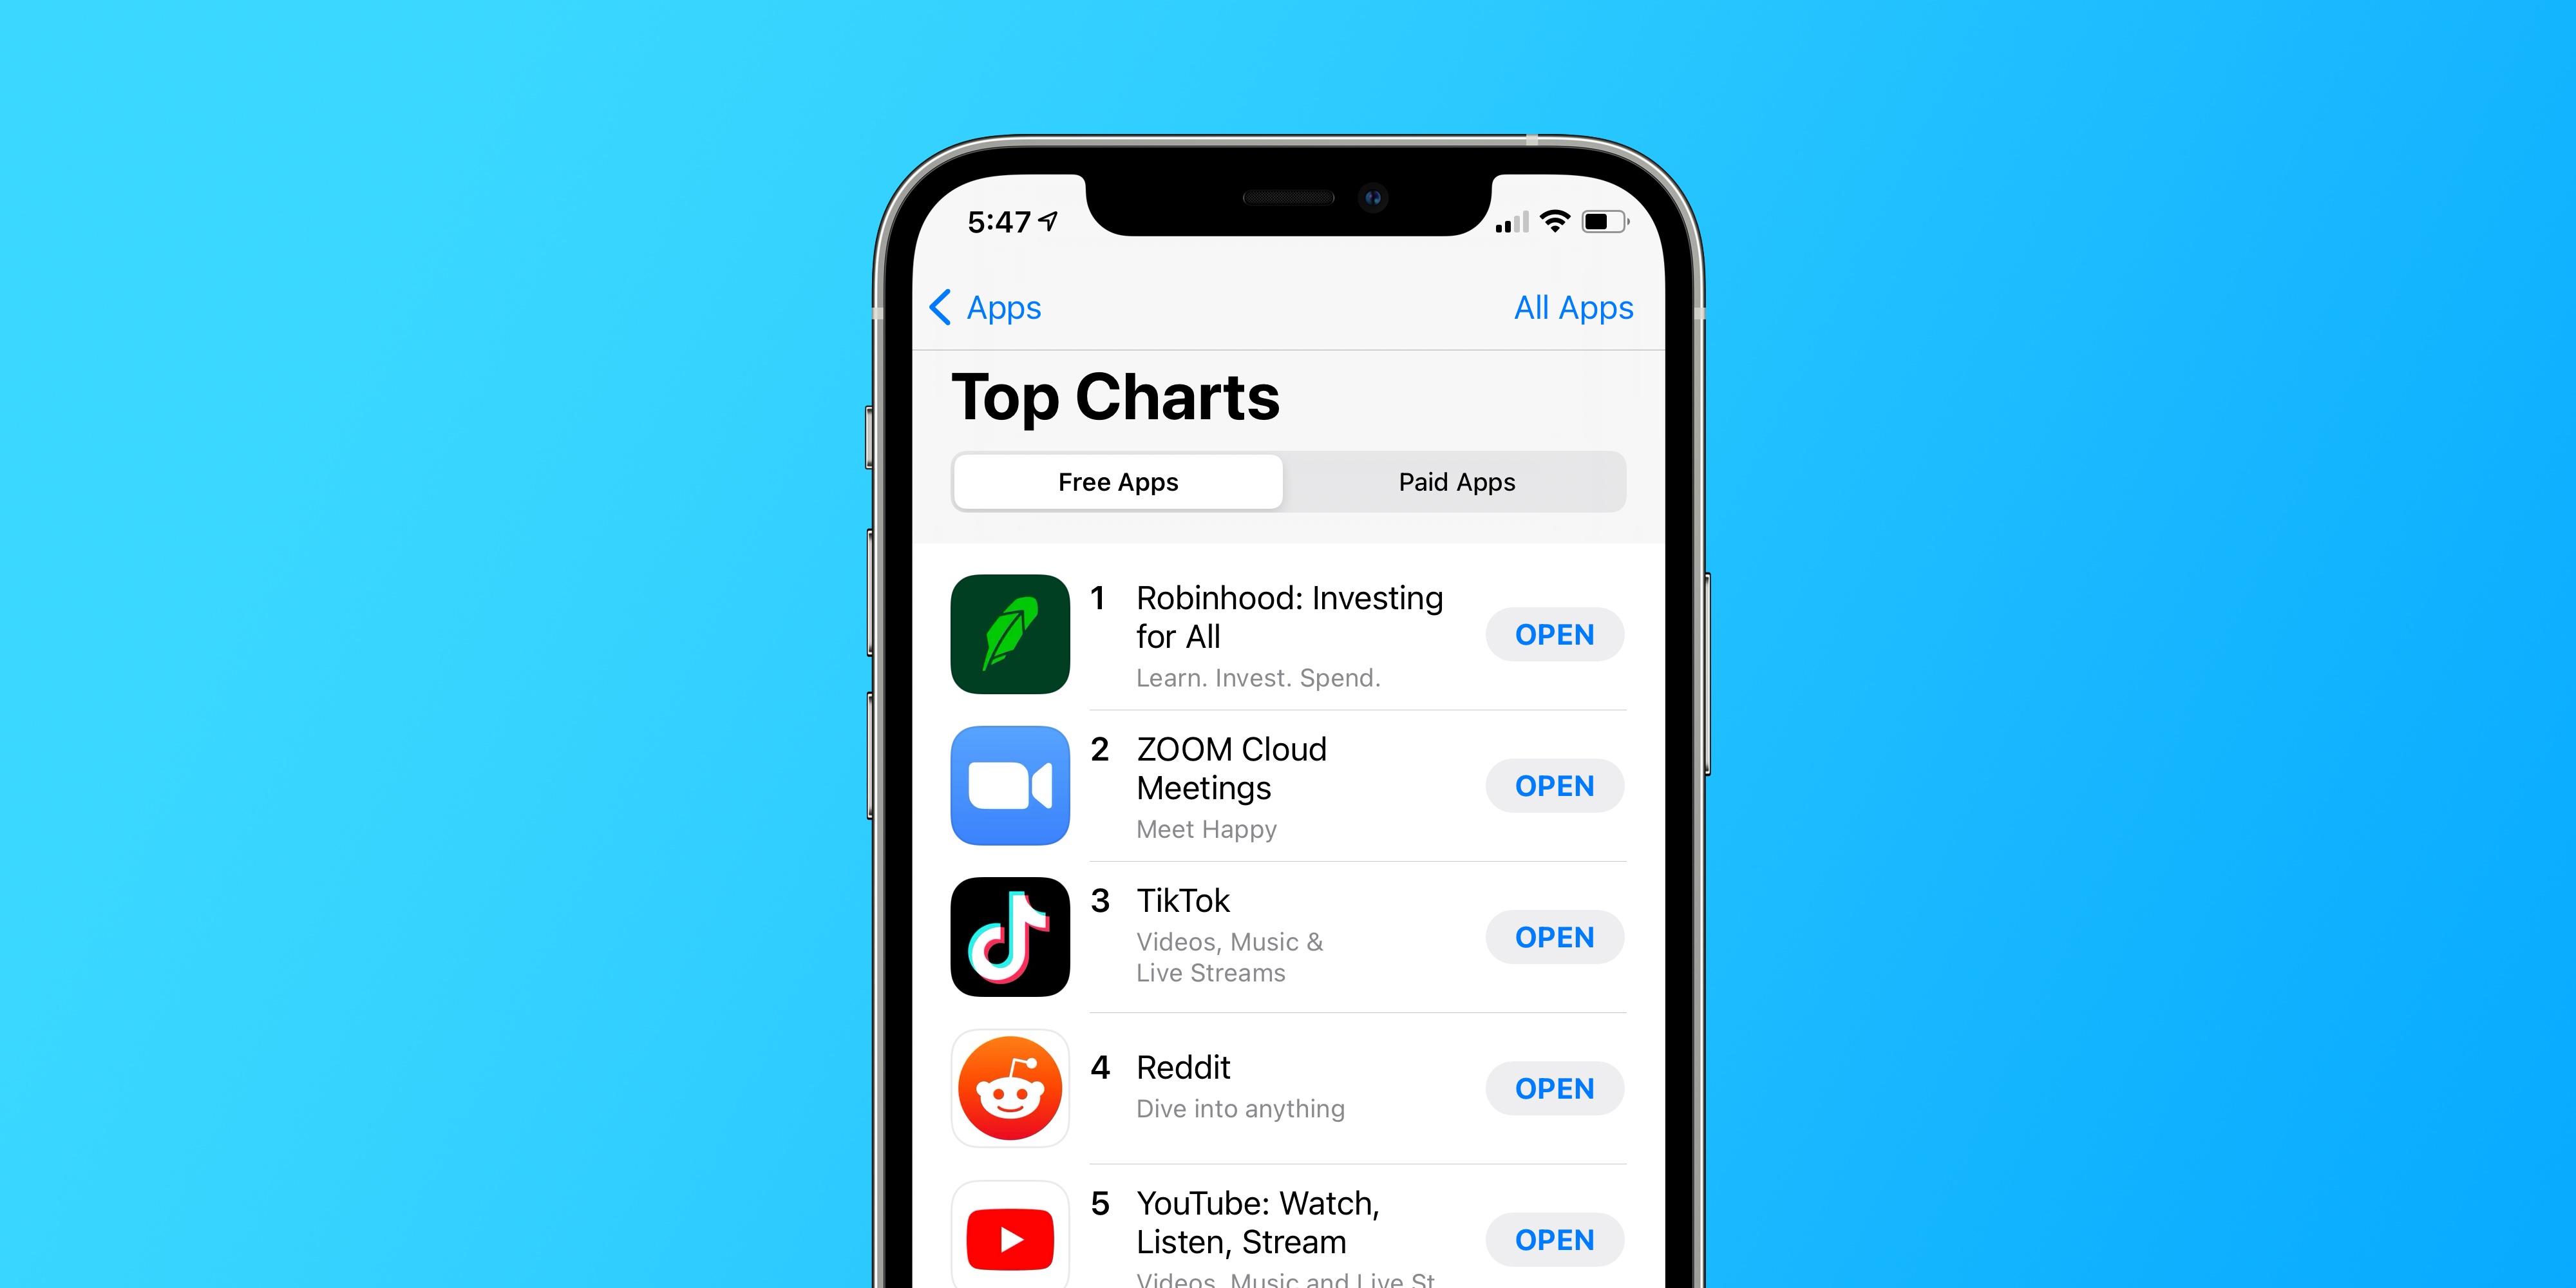 Gme Wsb Send Reddit And Robinhood Up App Store Charts 9to5mac